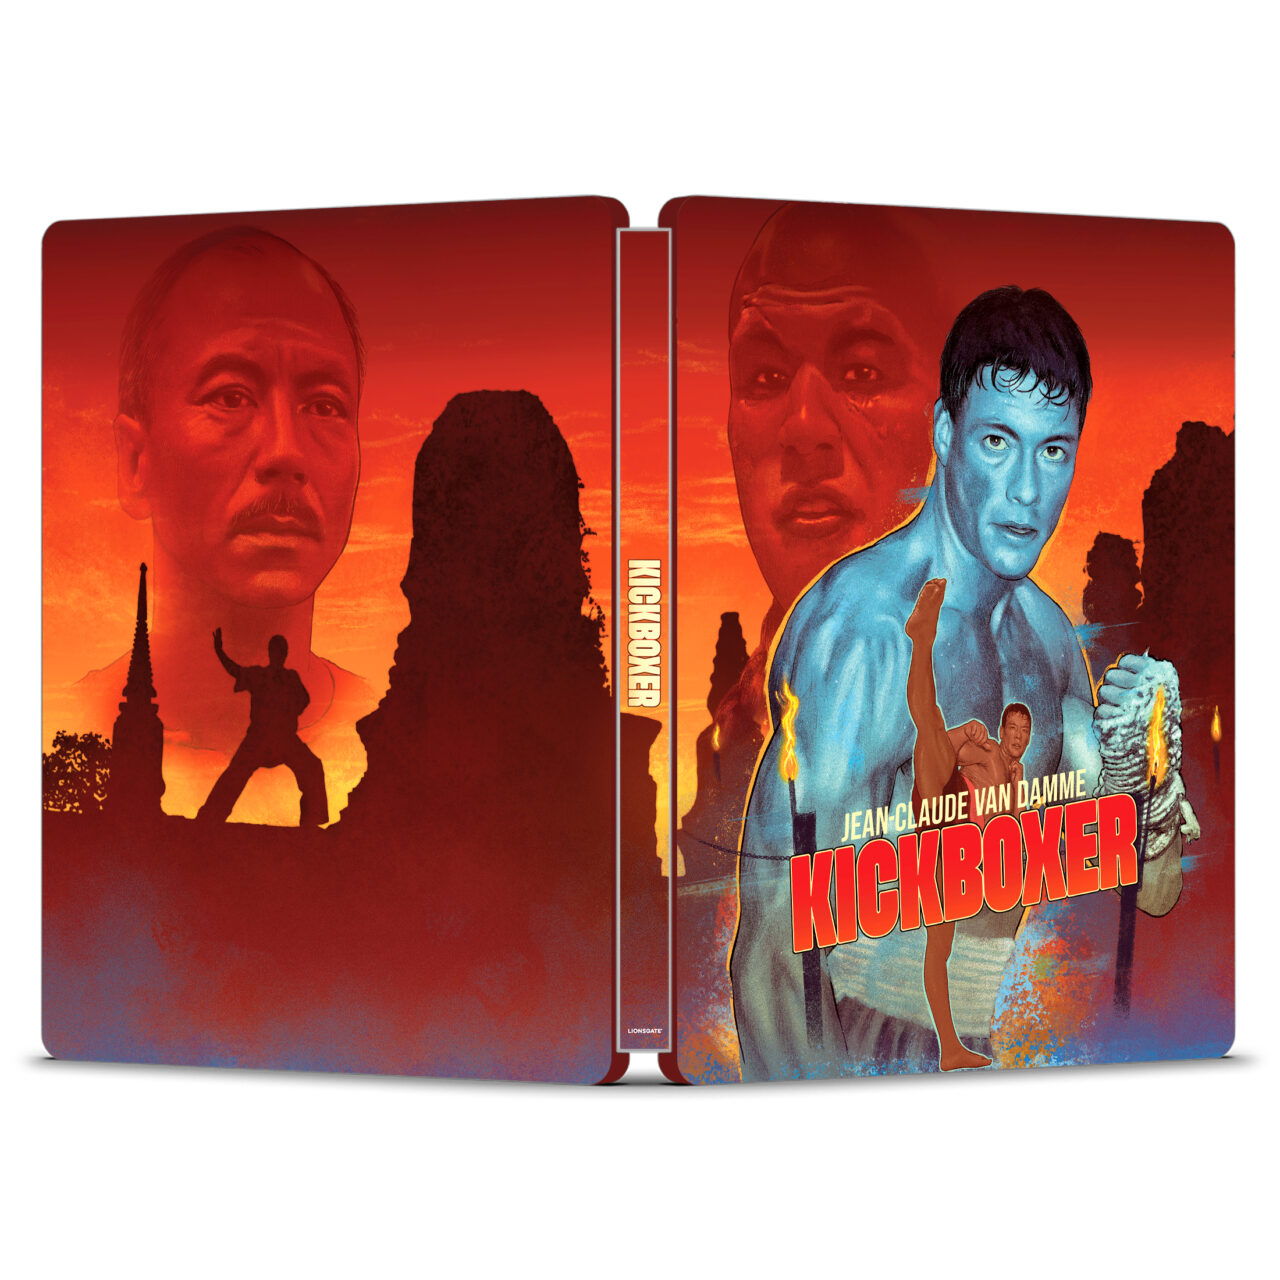 Kickboxer Blu-Ray Steelbook cover (Lionsgate)